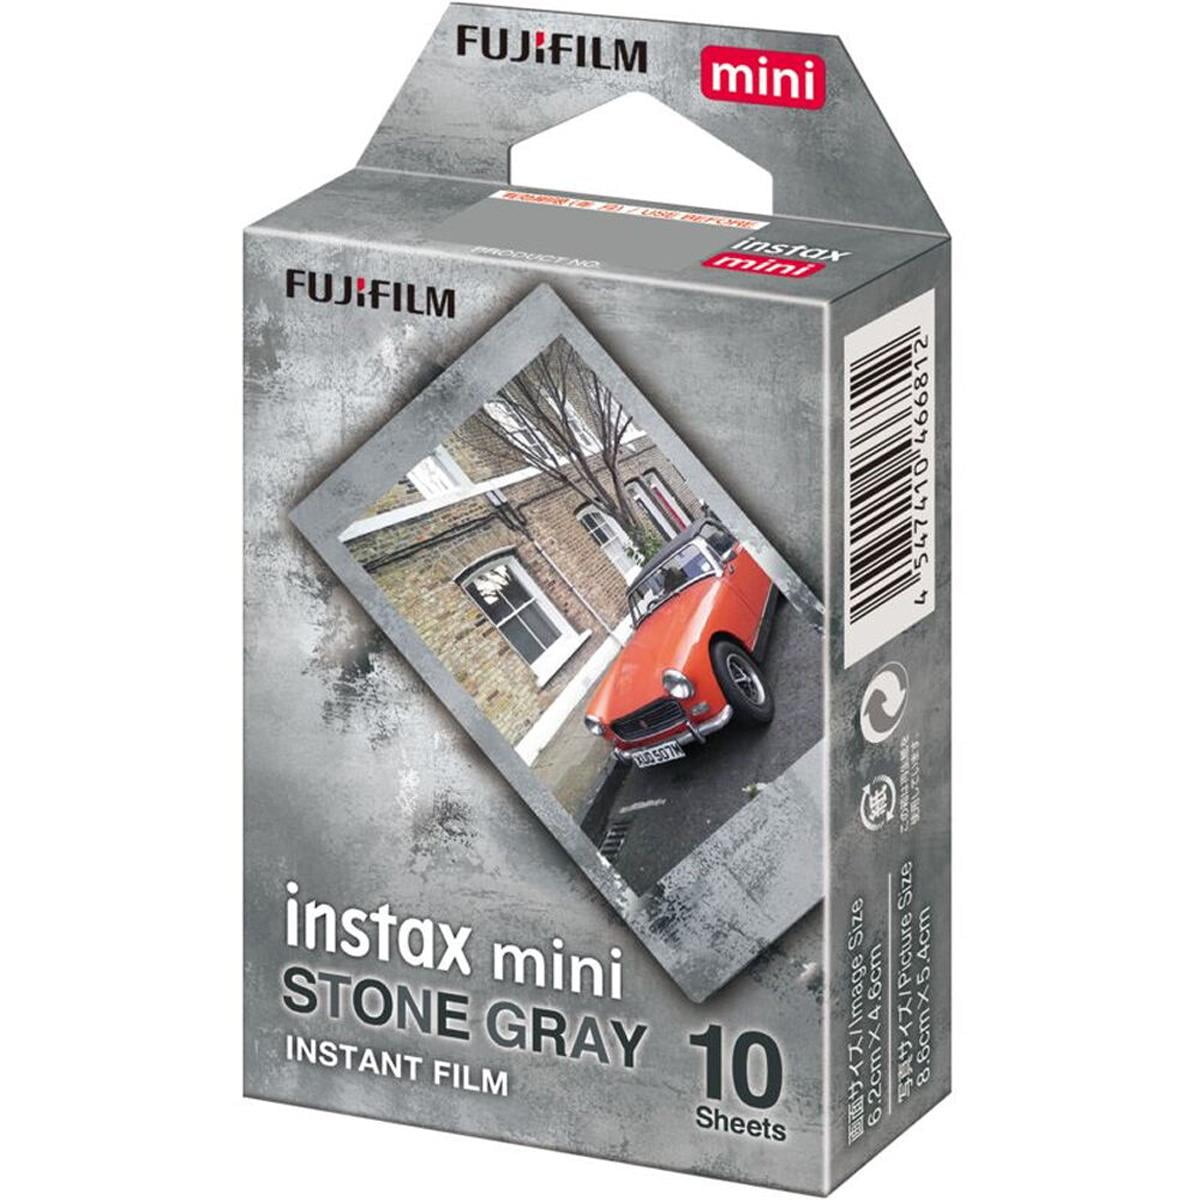  Fujifilm Instax Mini Stone Gray Film 10 Exposures 